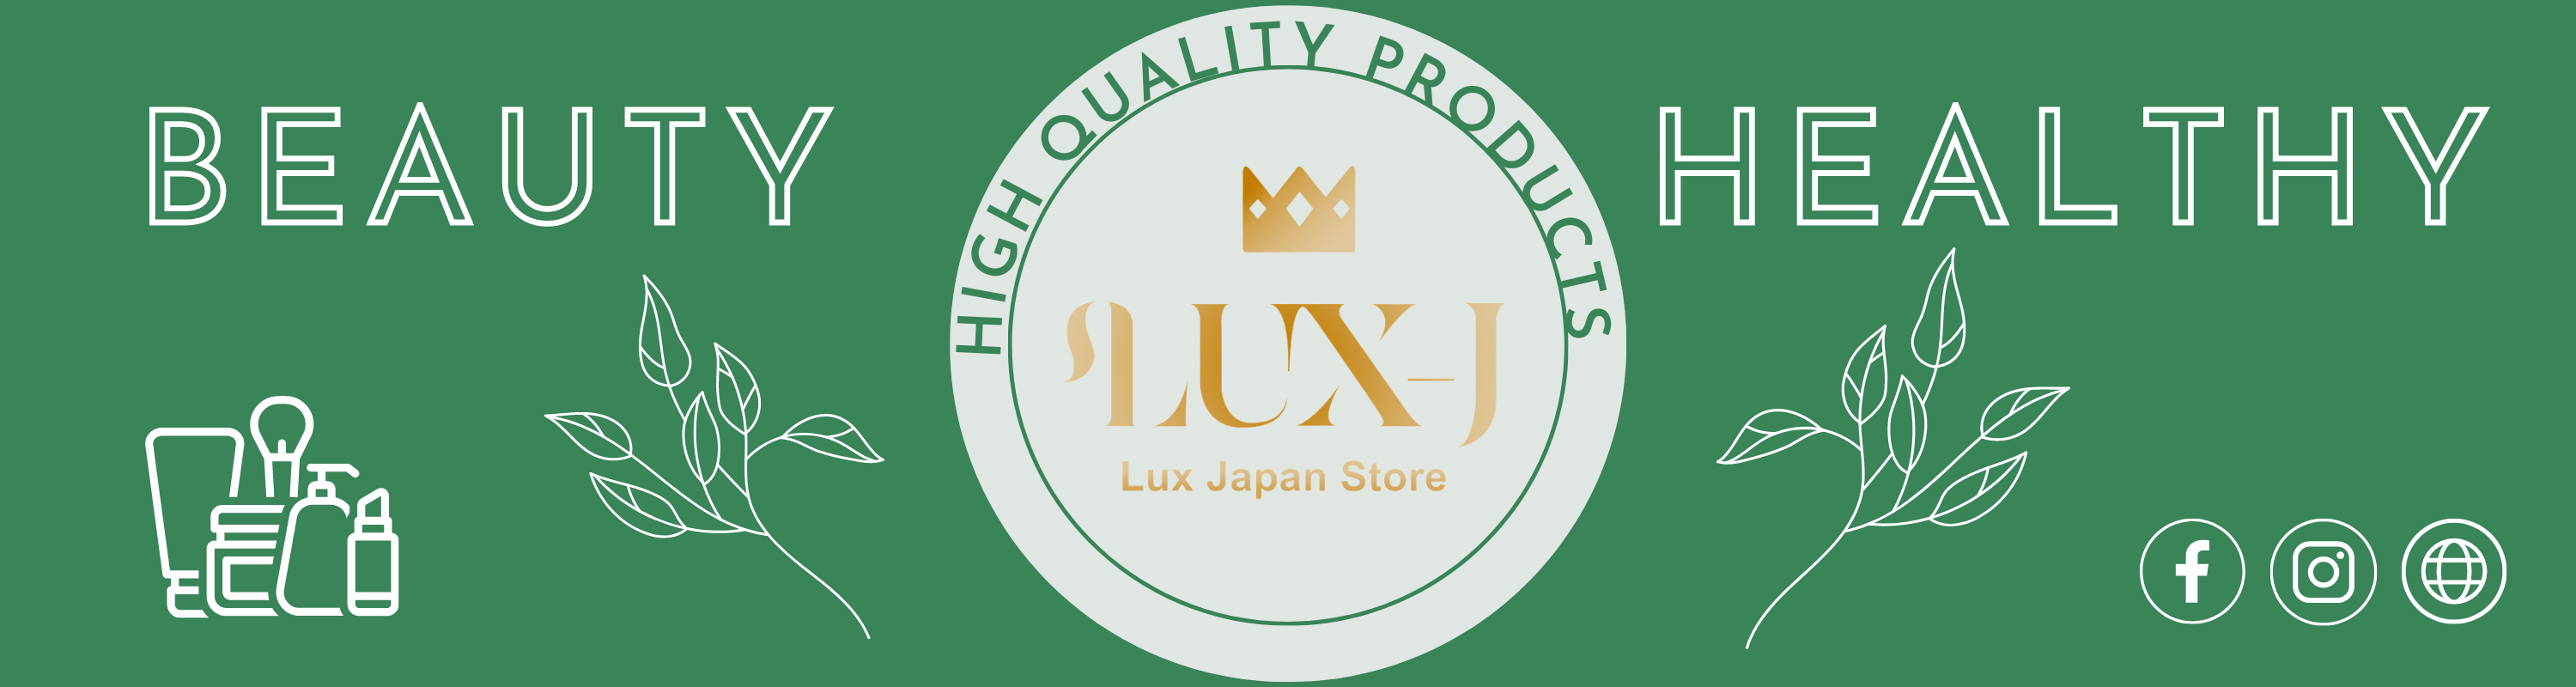 Lux Japan Care